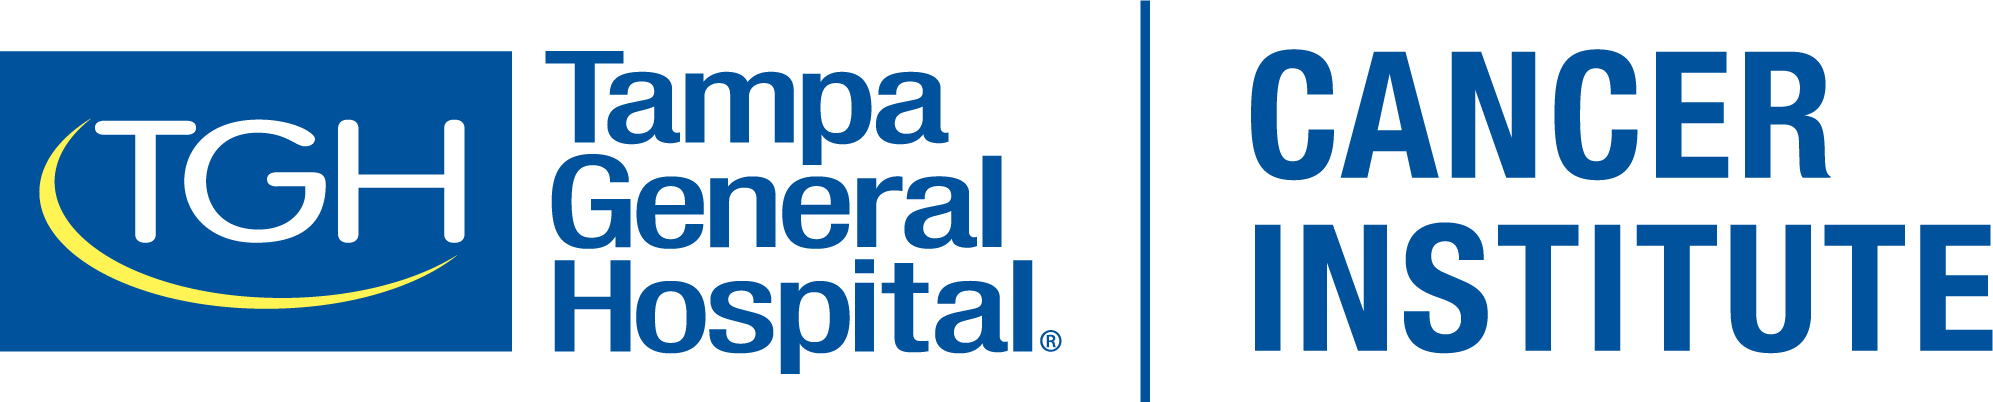 Tampa General Hospital Cancer Institute